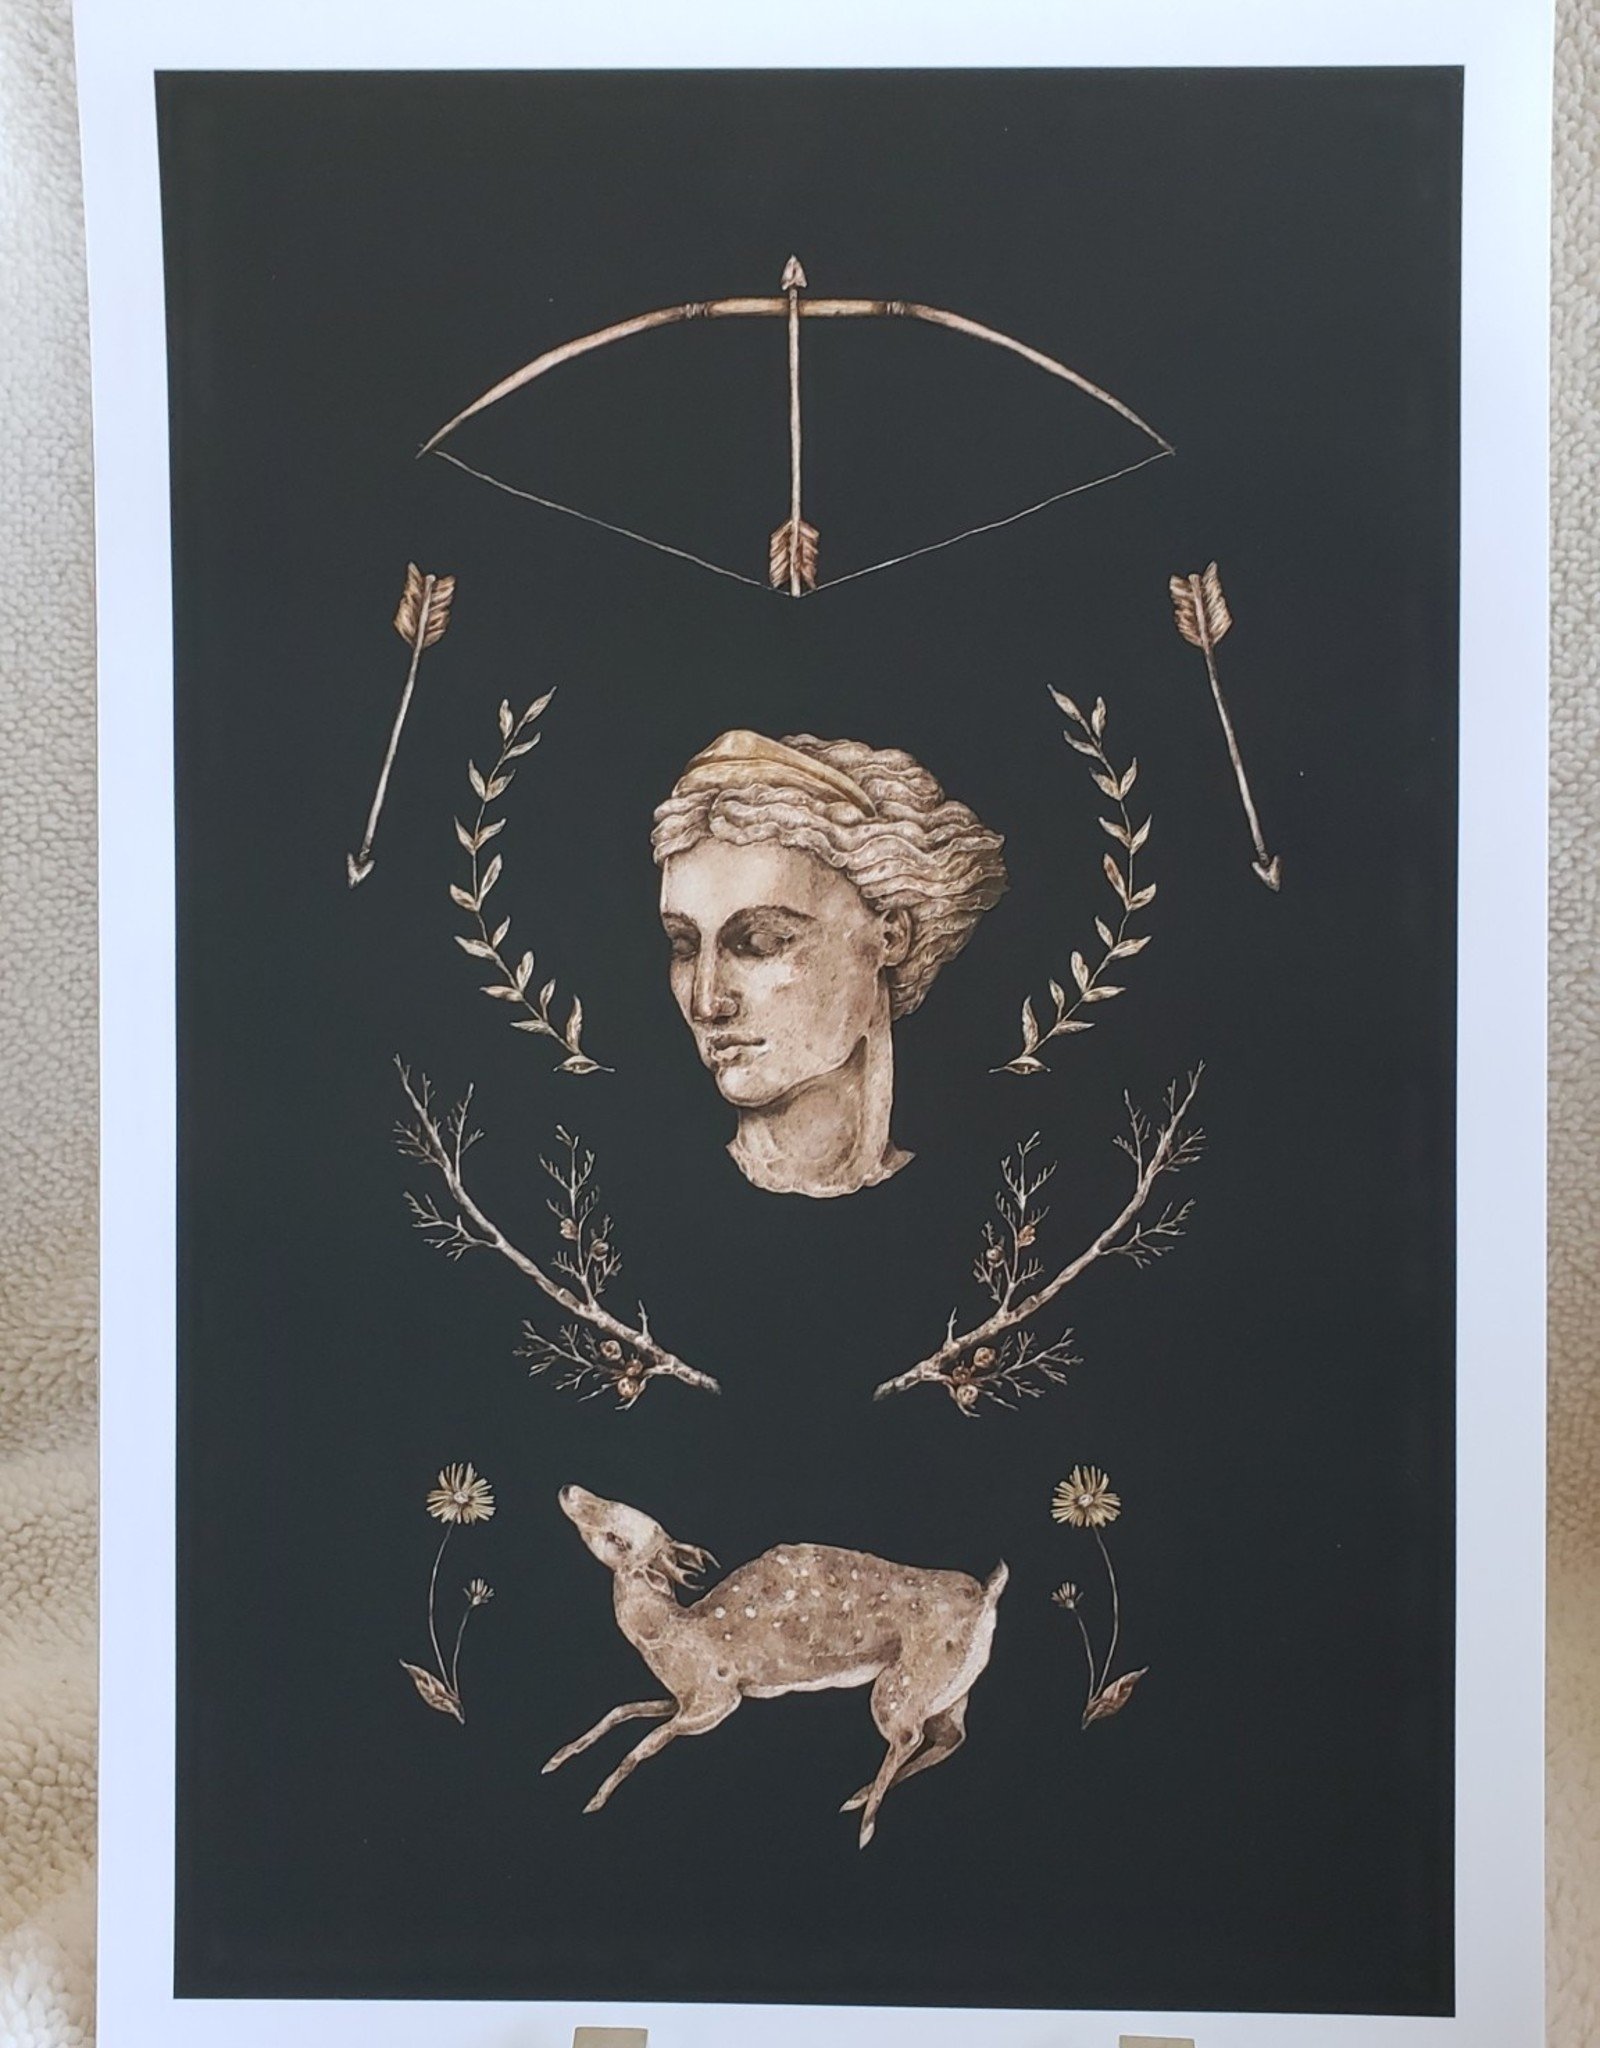 8 x 12" Artemis Print